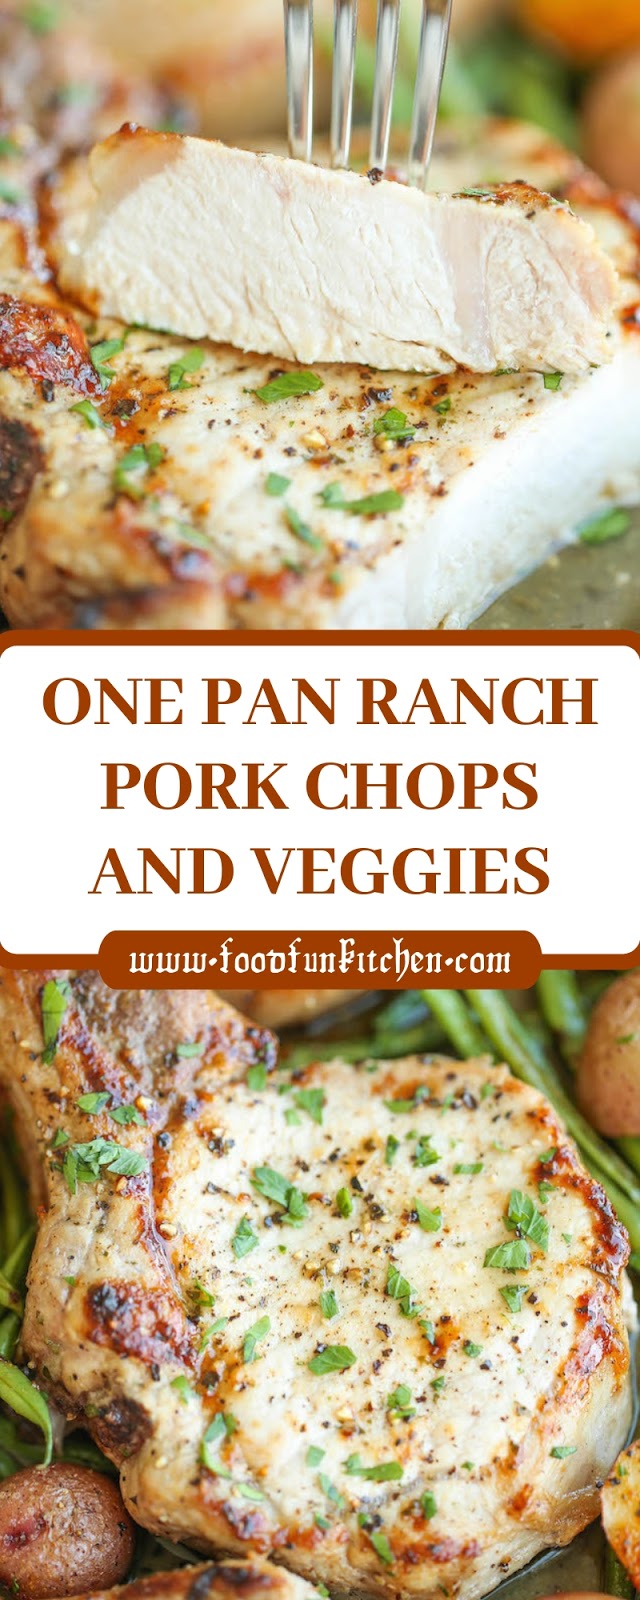 ONE PAN RANCH PORK CHOPS AND VEGGIES